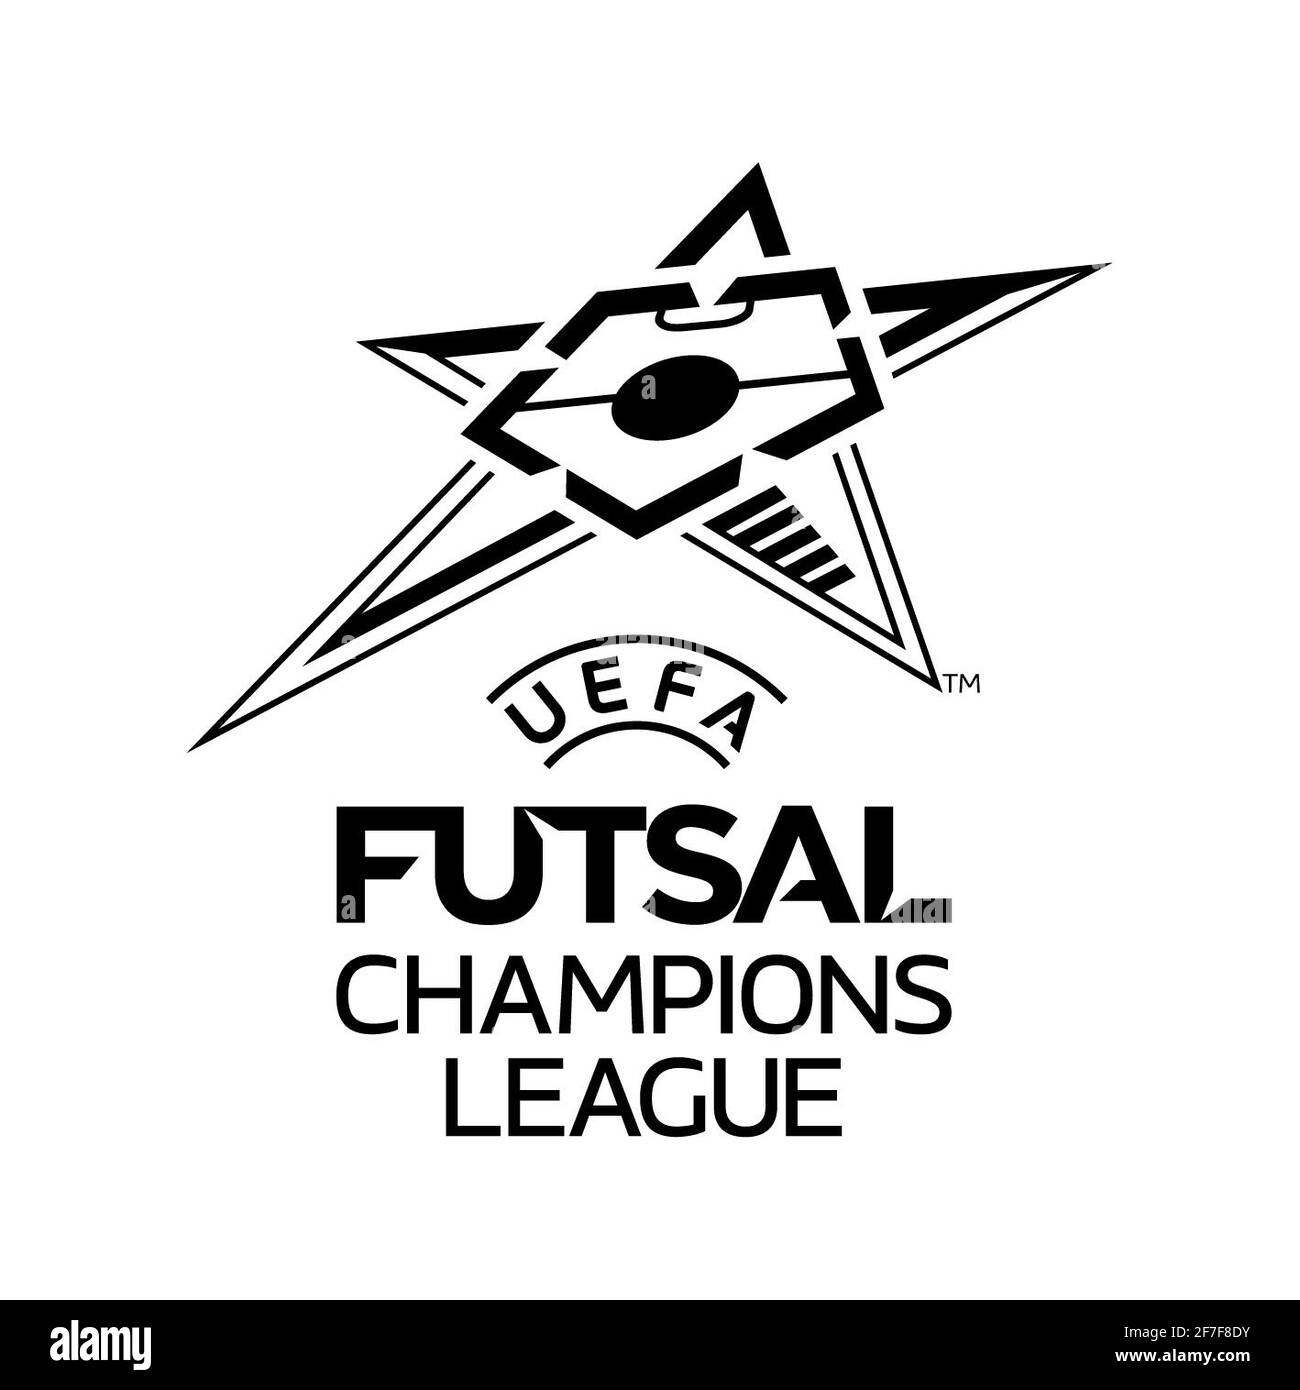 UEFA Futsal Champions League Logo Stock Photo